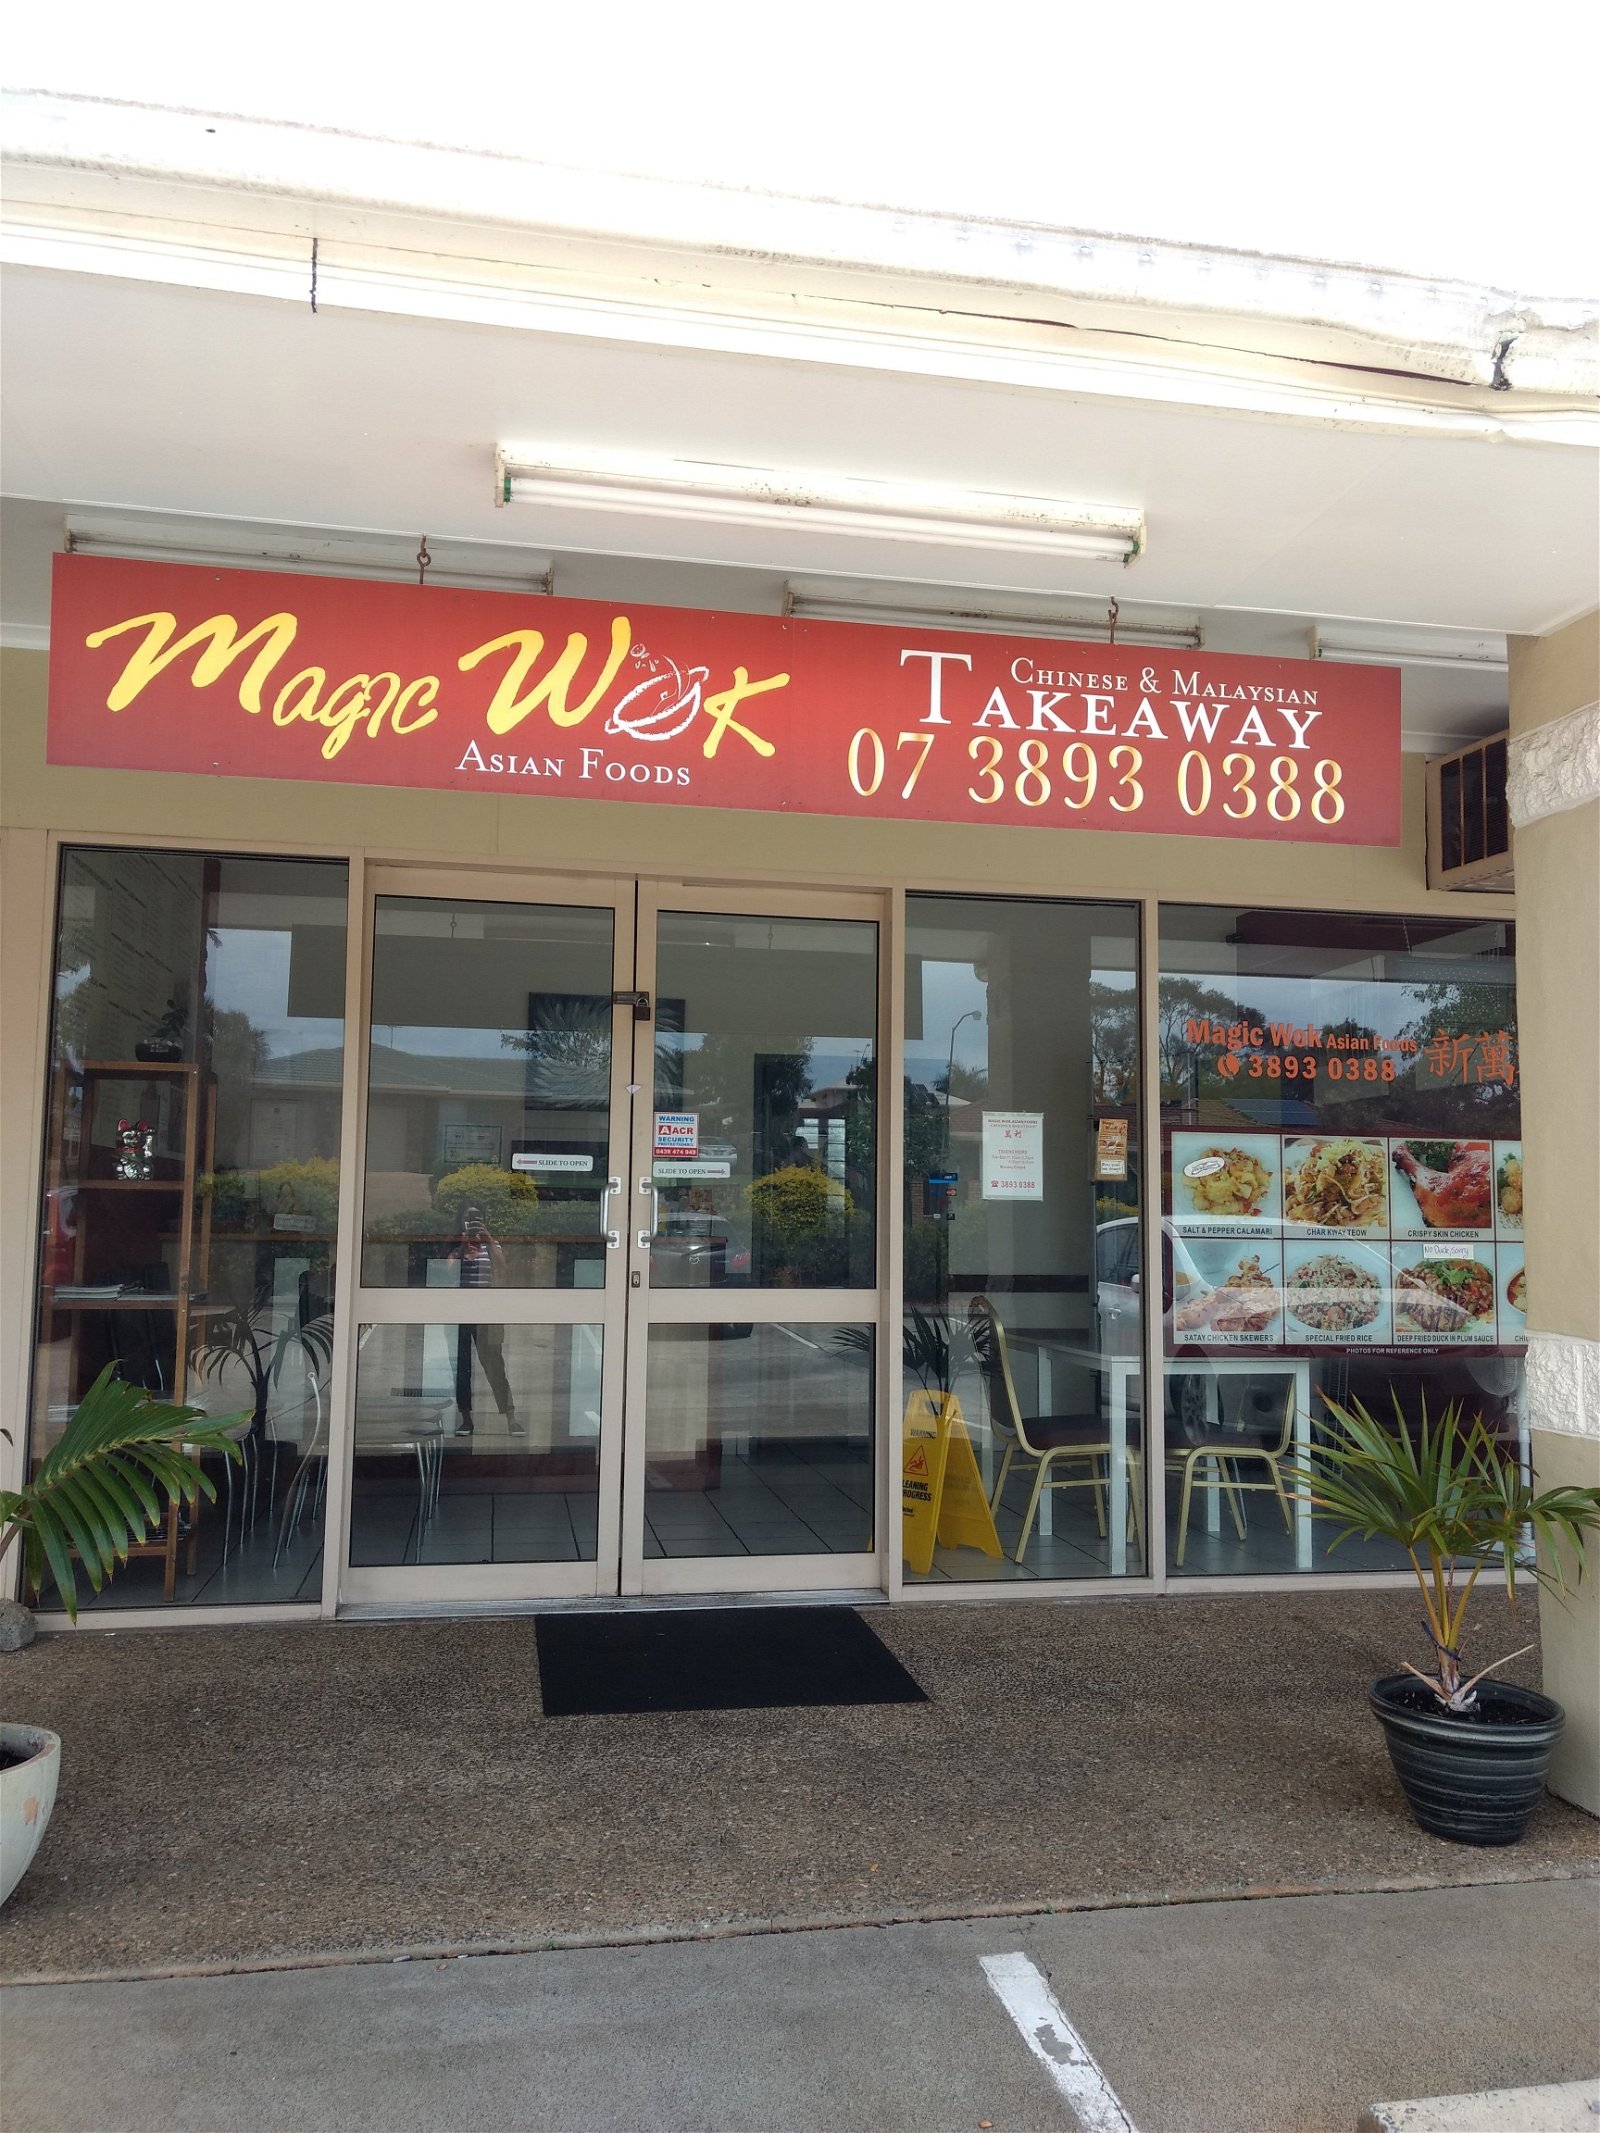 Magic Wok Asian Foods - Australia Accommodation